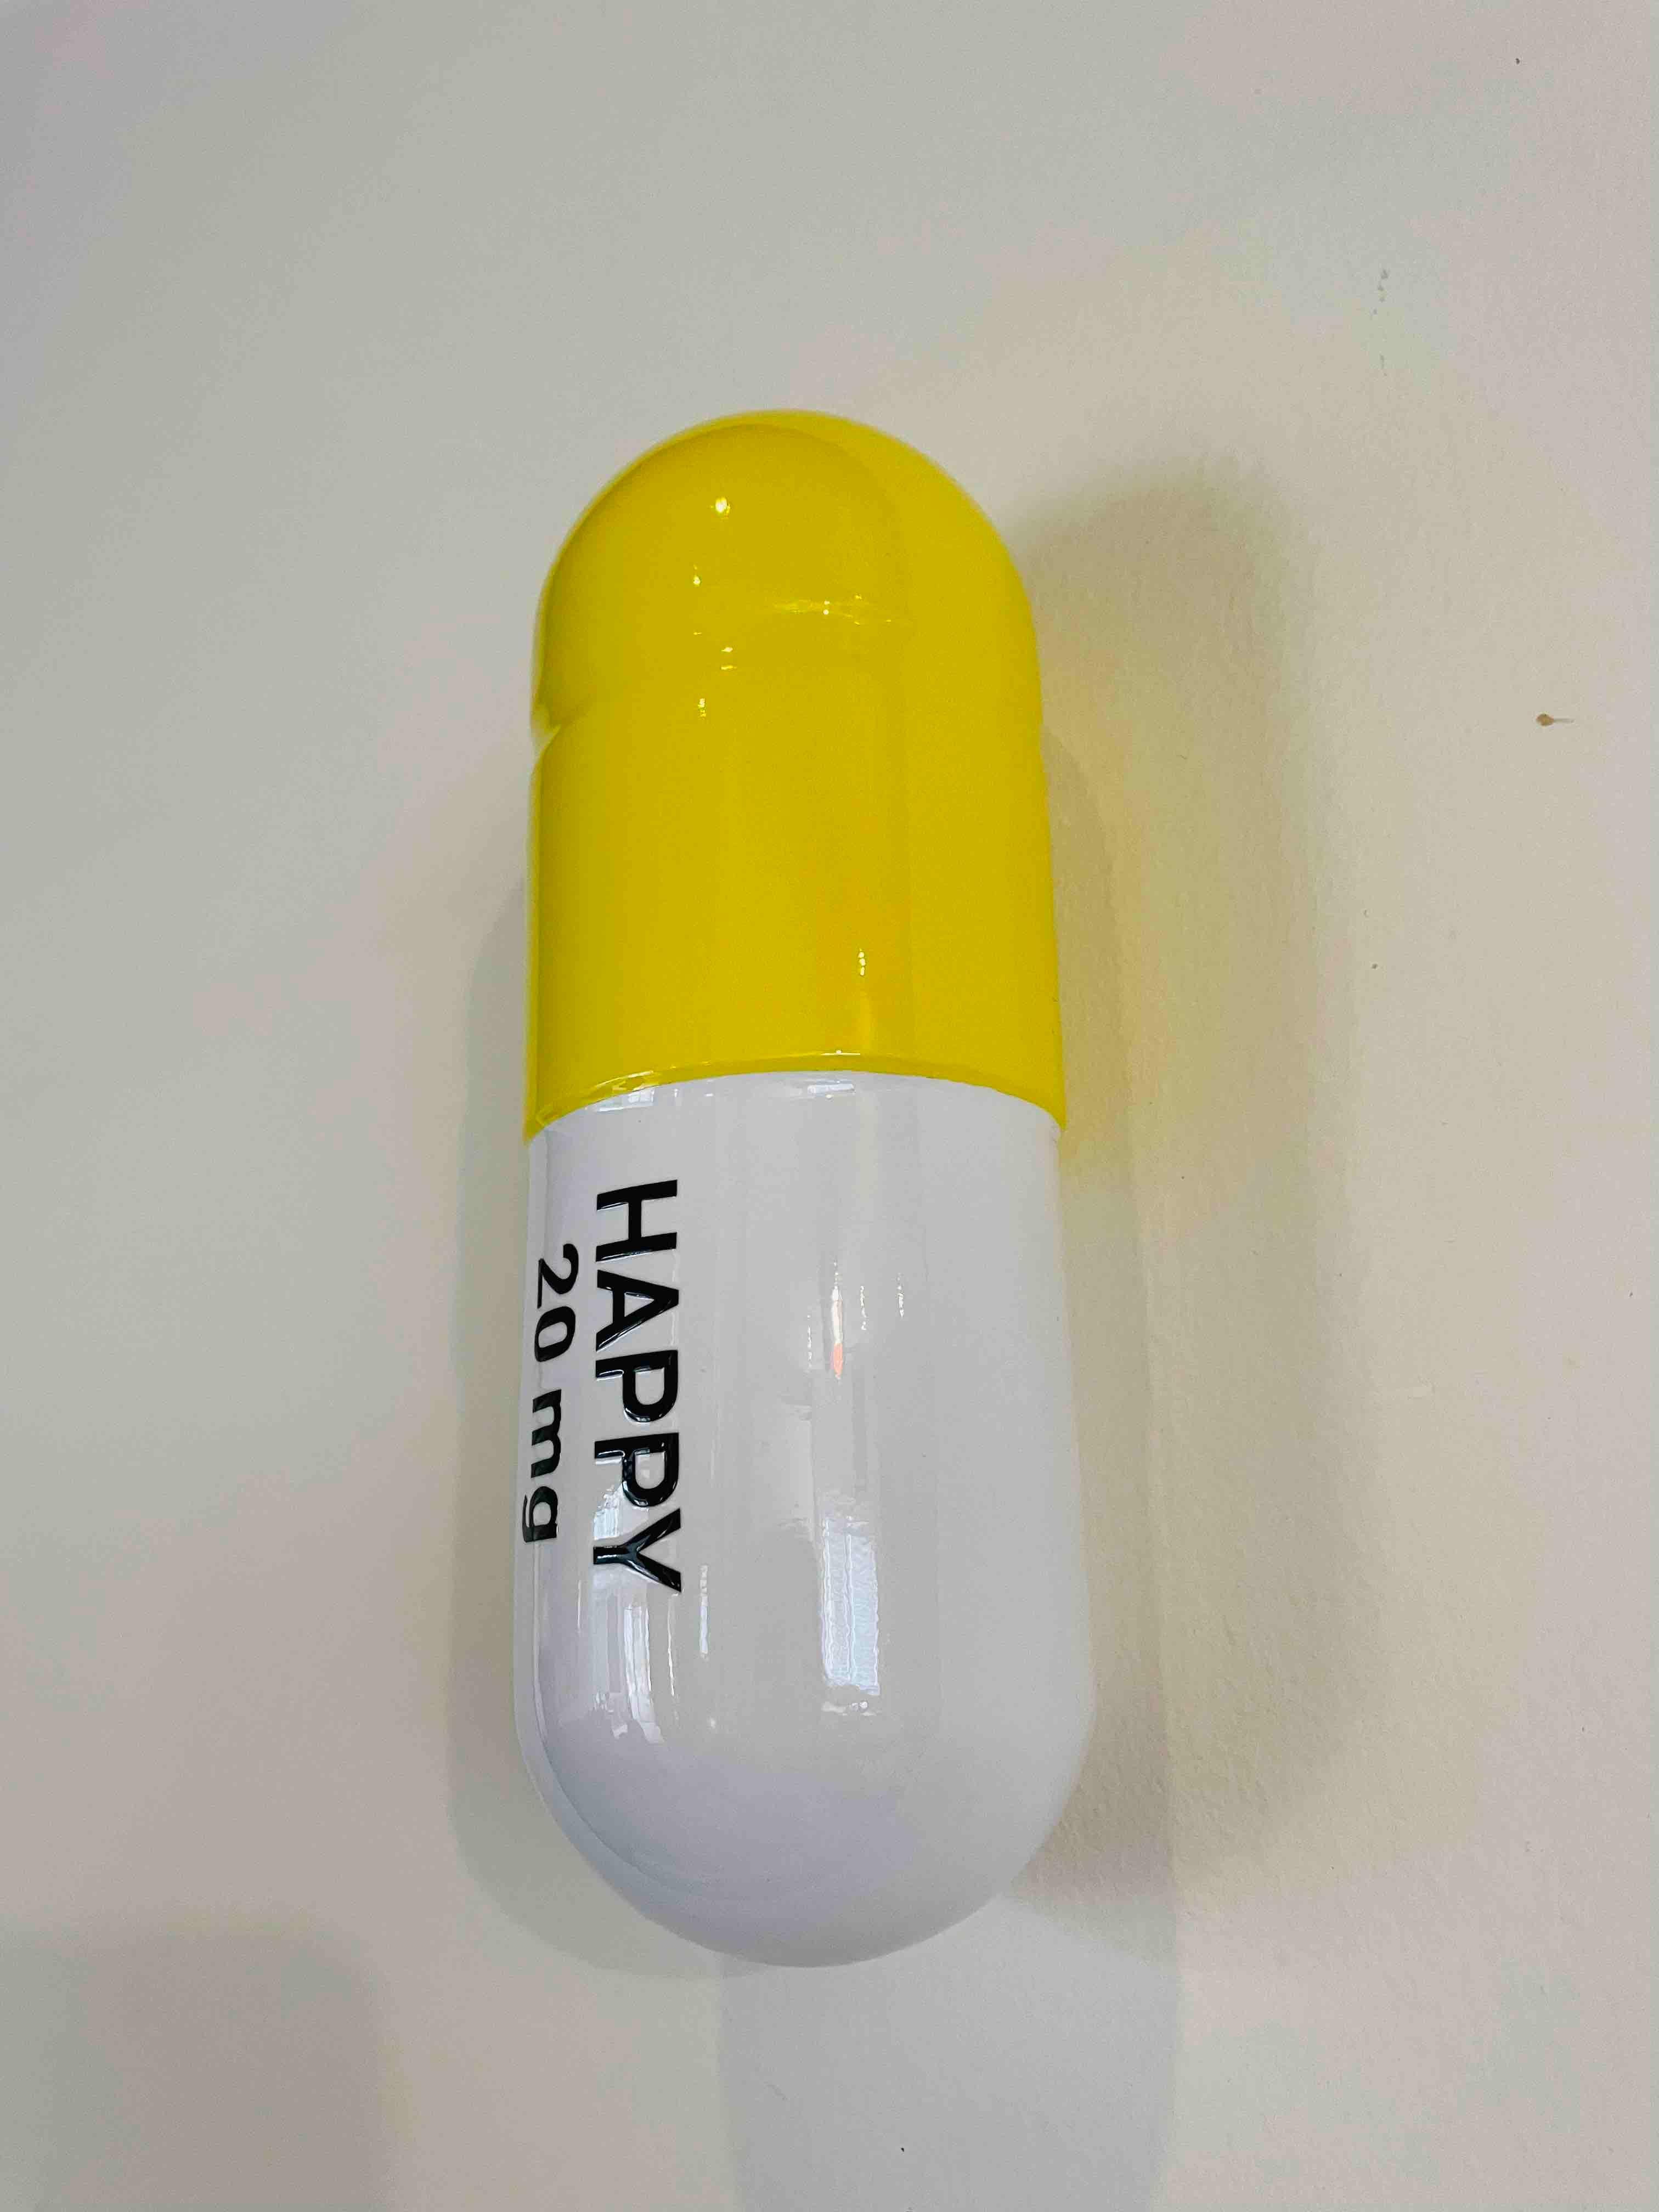 yellow and white capsule 20 mg